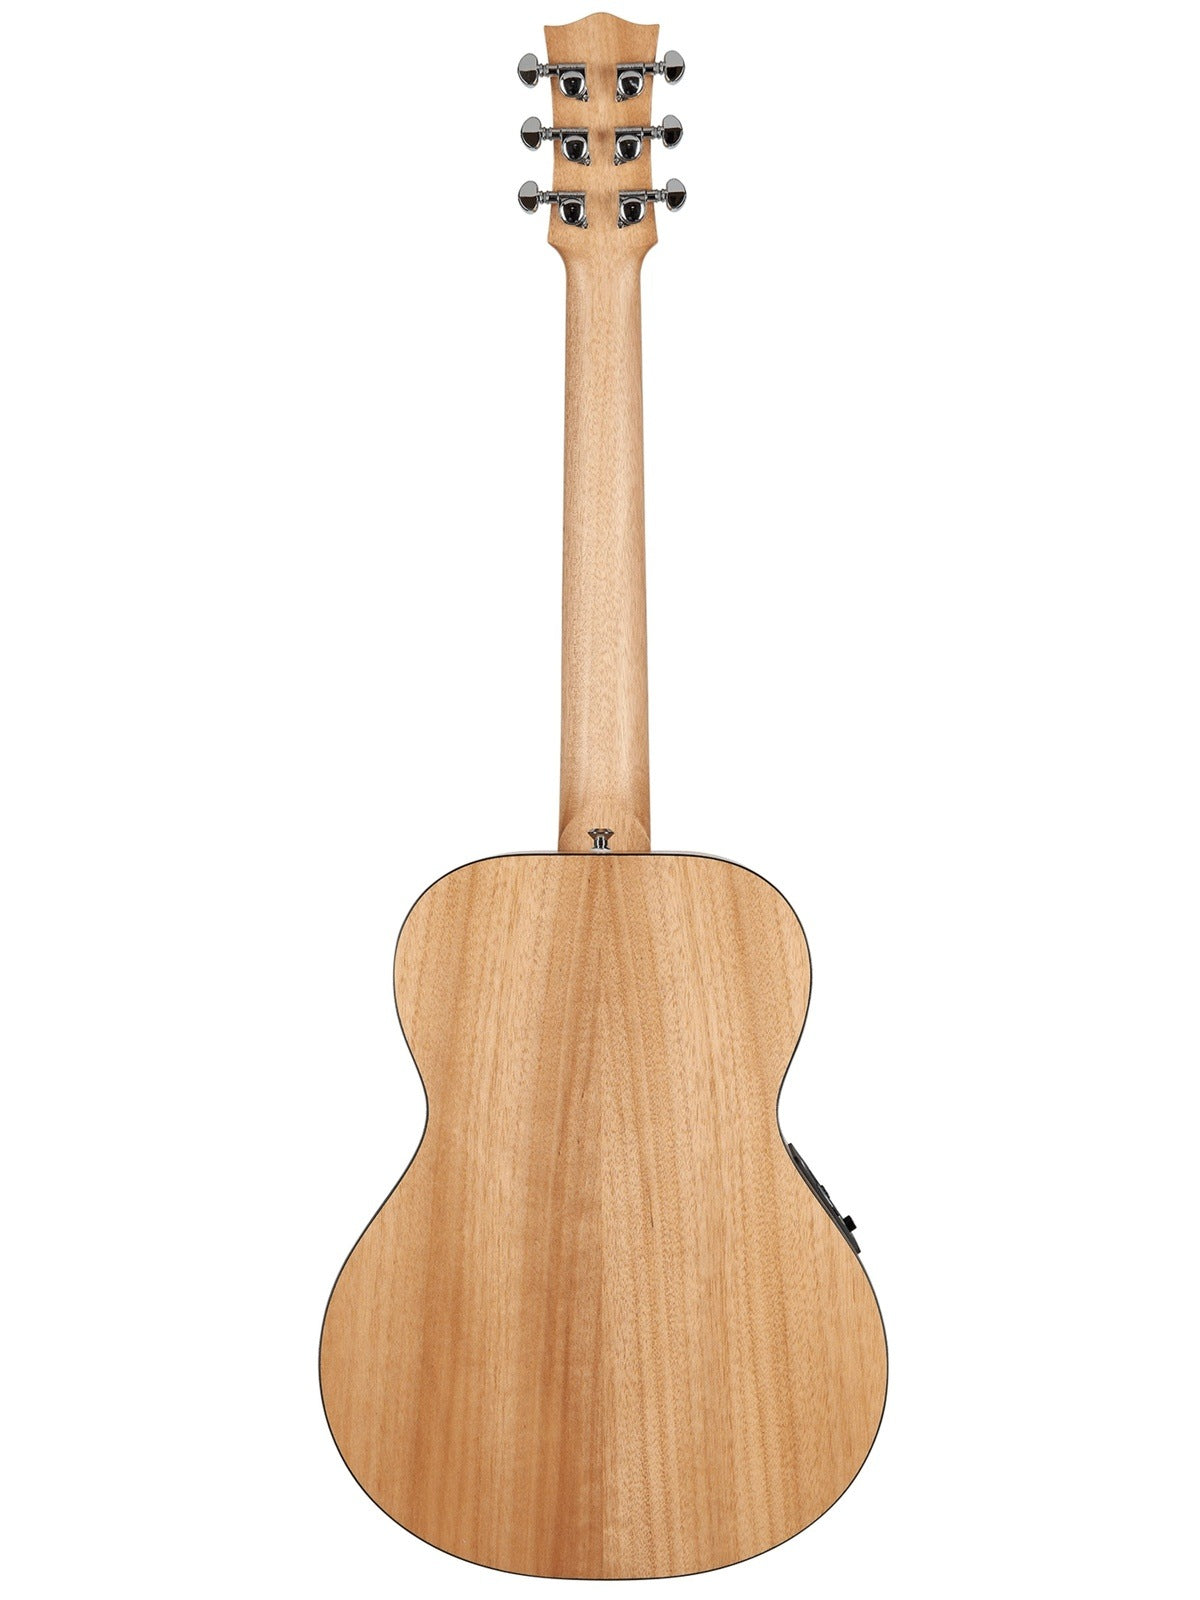 Maton EM-6 Acoustic Guitar